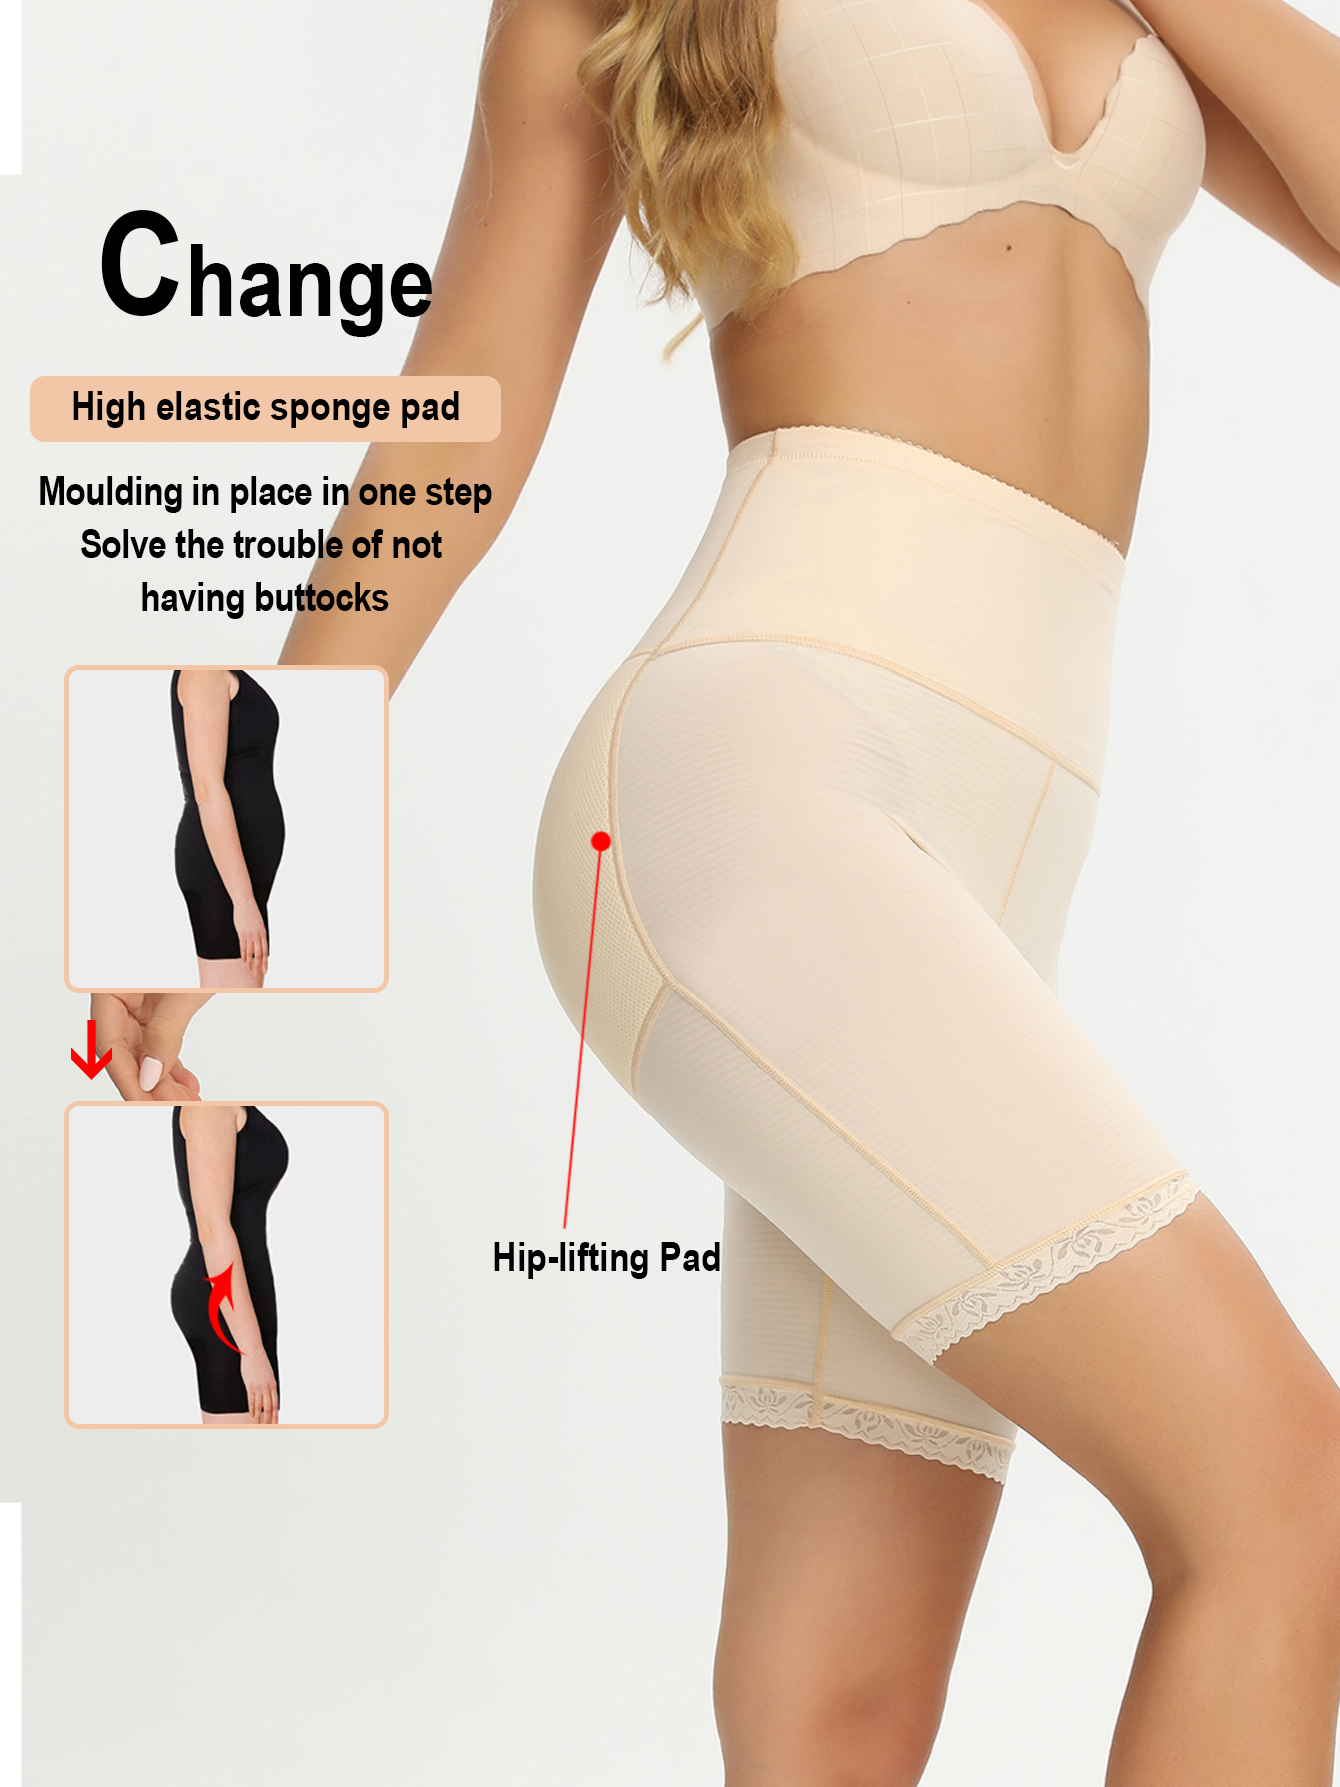 Women's Butt Lift Booster Booty Lifter Control Panty Shapewear Enhancer  Booster Body Shaping, Black, XL